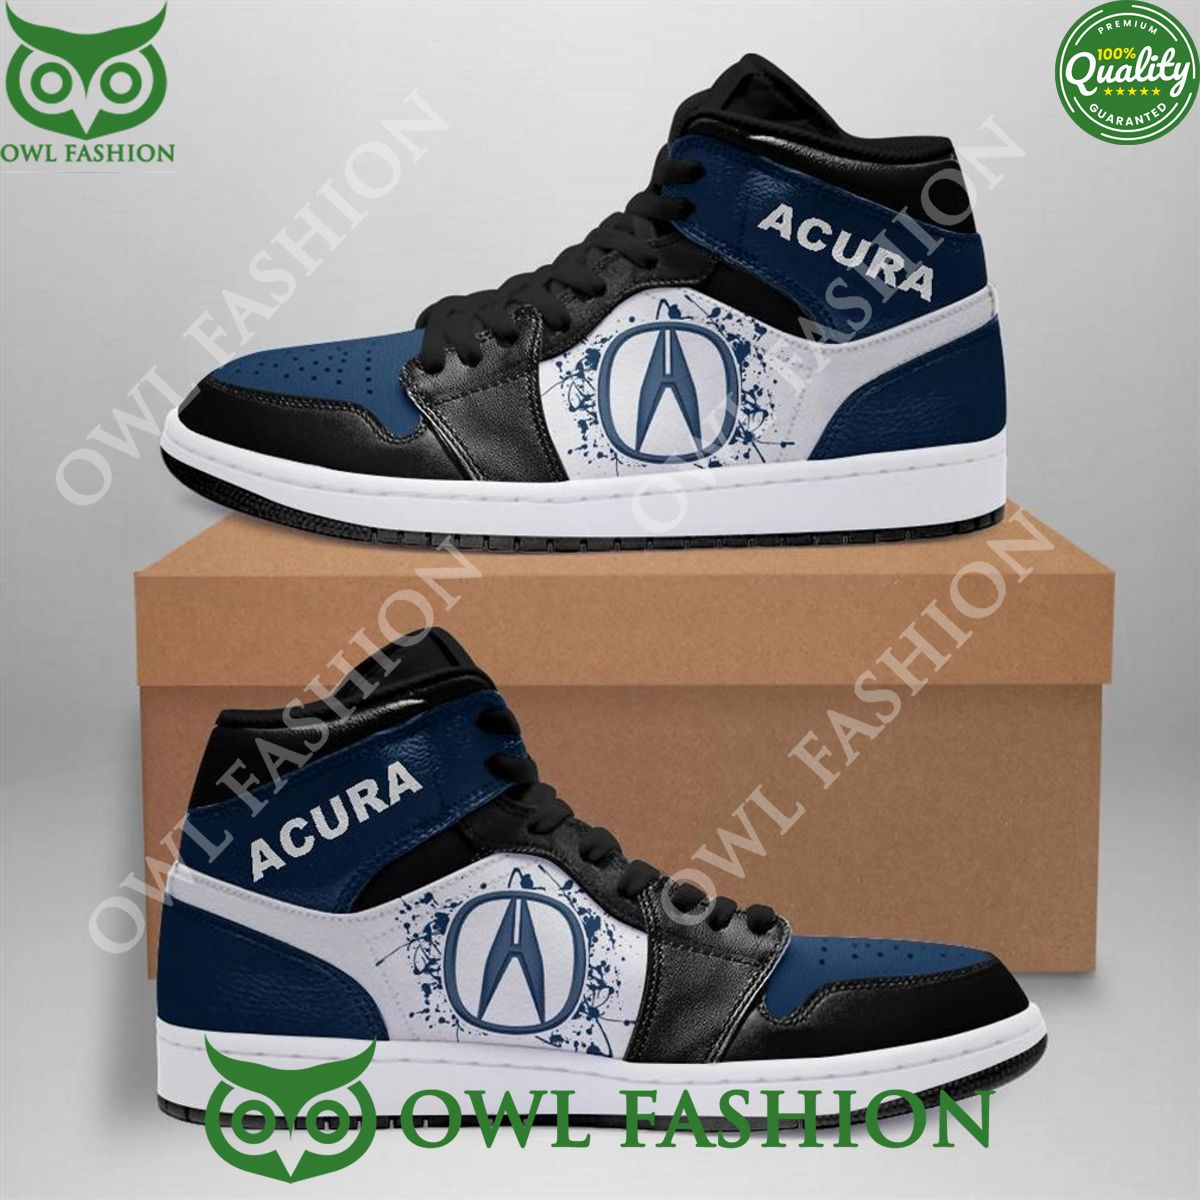 acura automobile car brand air jordan sneaker boots shoes sport 1 IpCQs.jpg